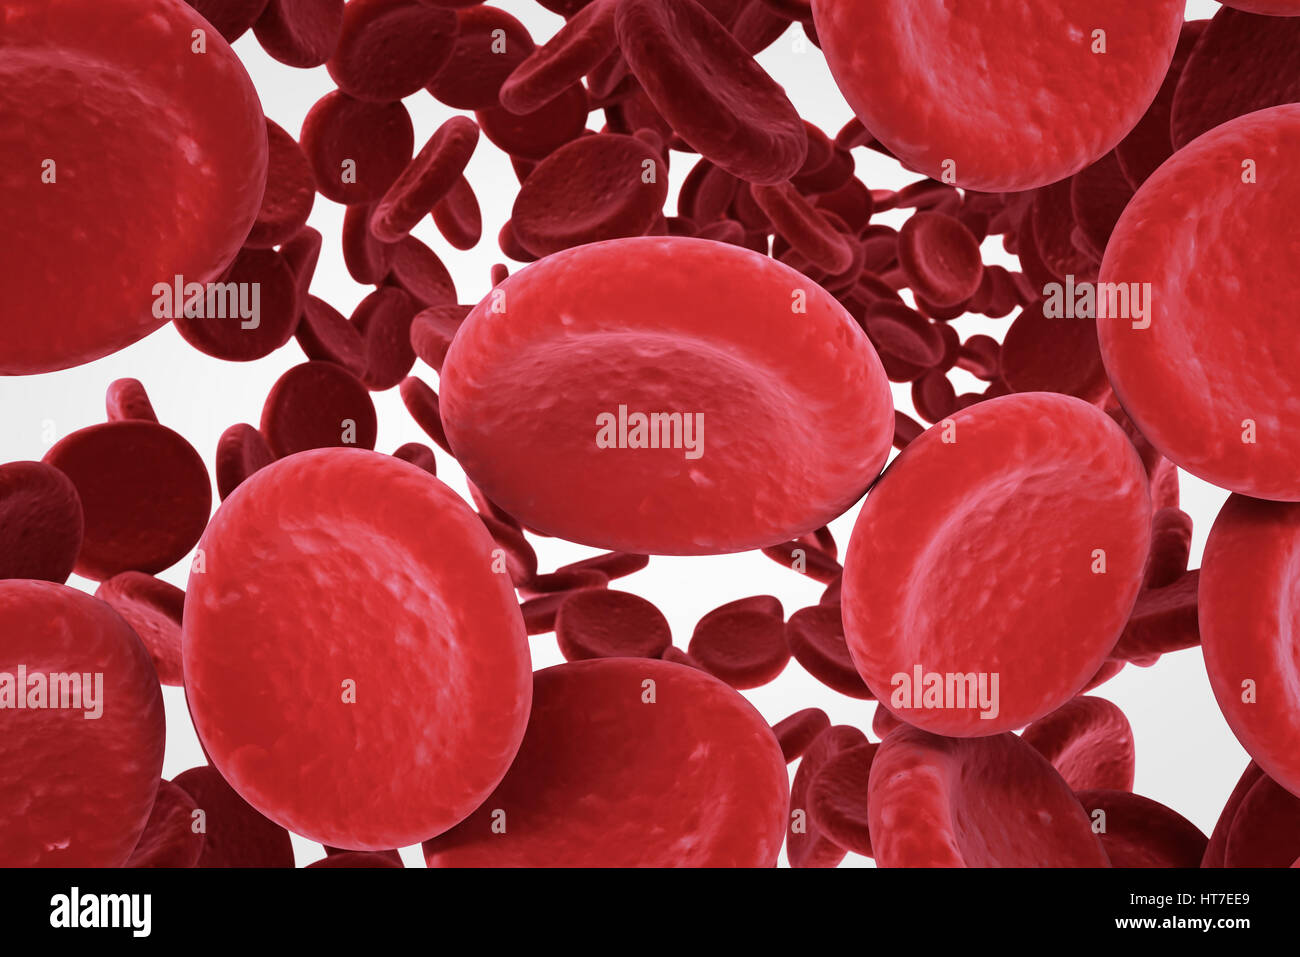 Blood Cells background, 3D illustration Stock Photo